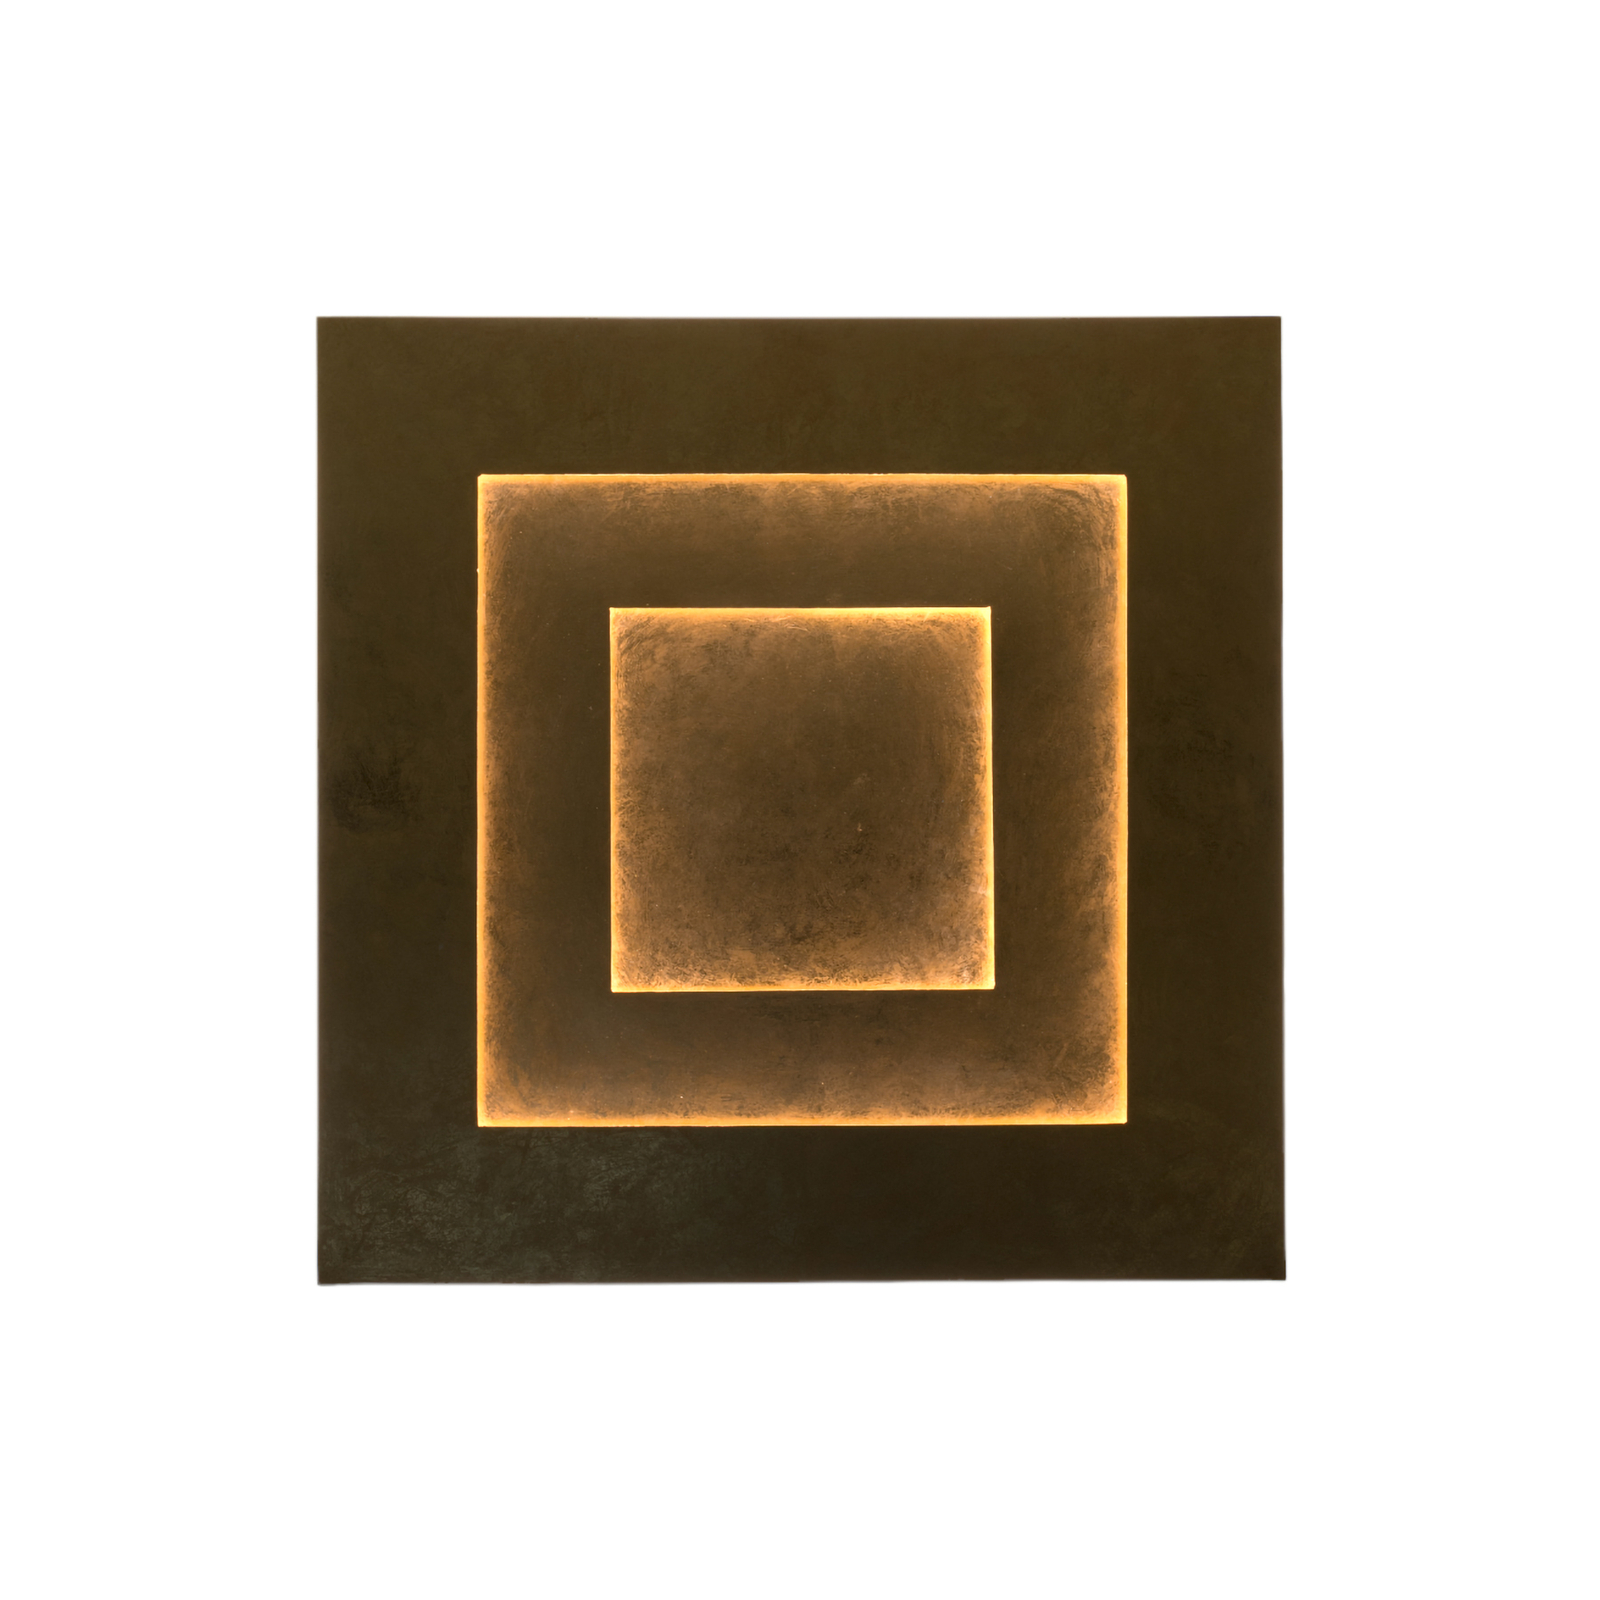 LED fali világítás Masaccio Quadrato, arany